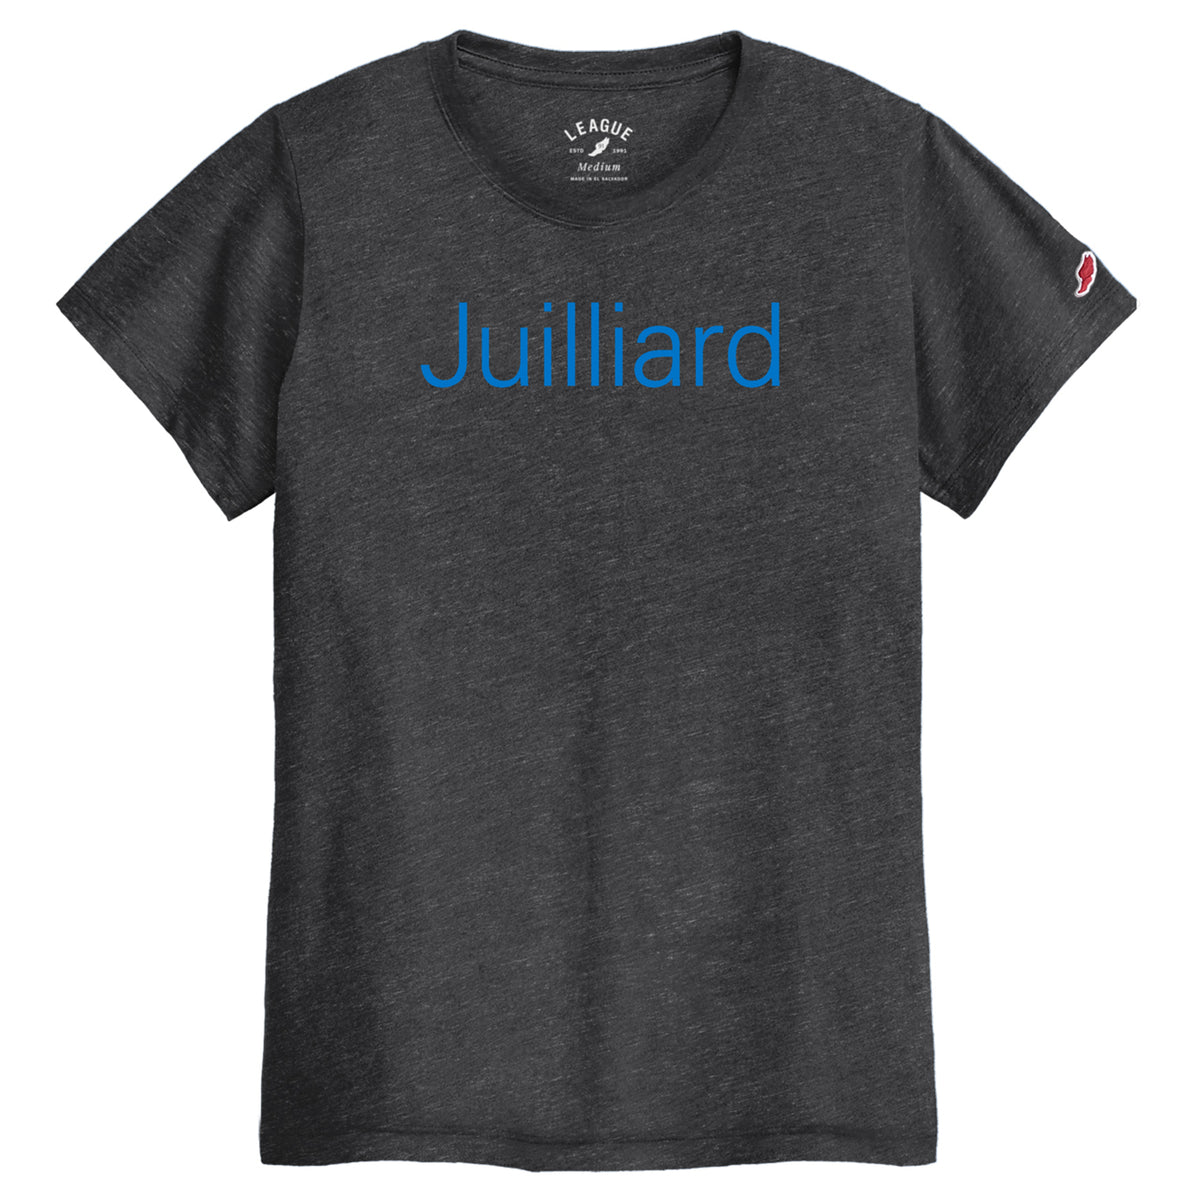 T-shirt: Juilliard Intramural universal font (ladies cut) (Earth friendly)